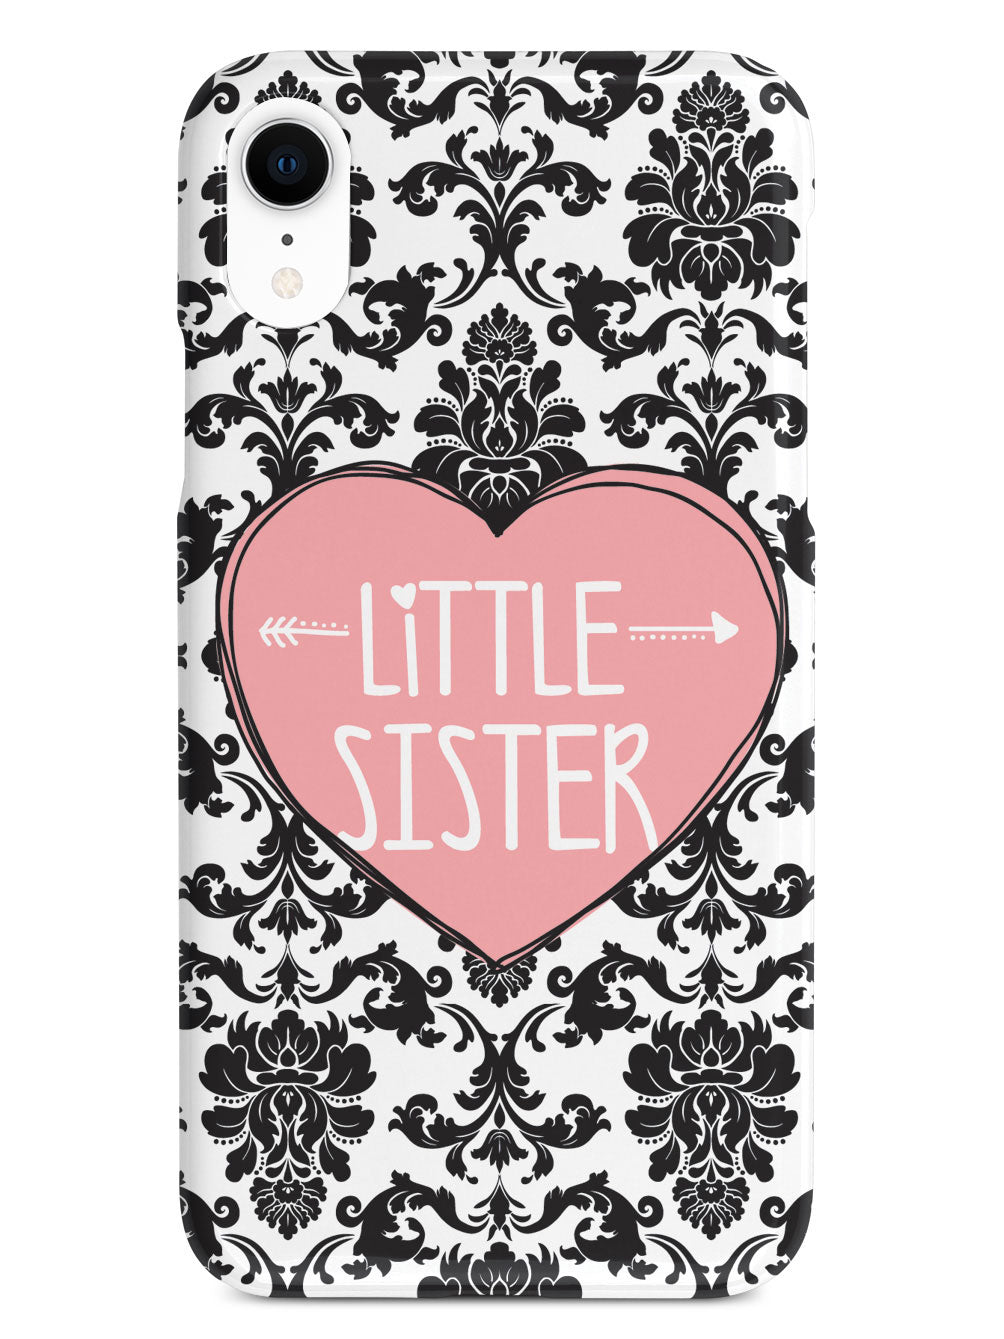 Sisterly Love - Little Sister - Damask Case